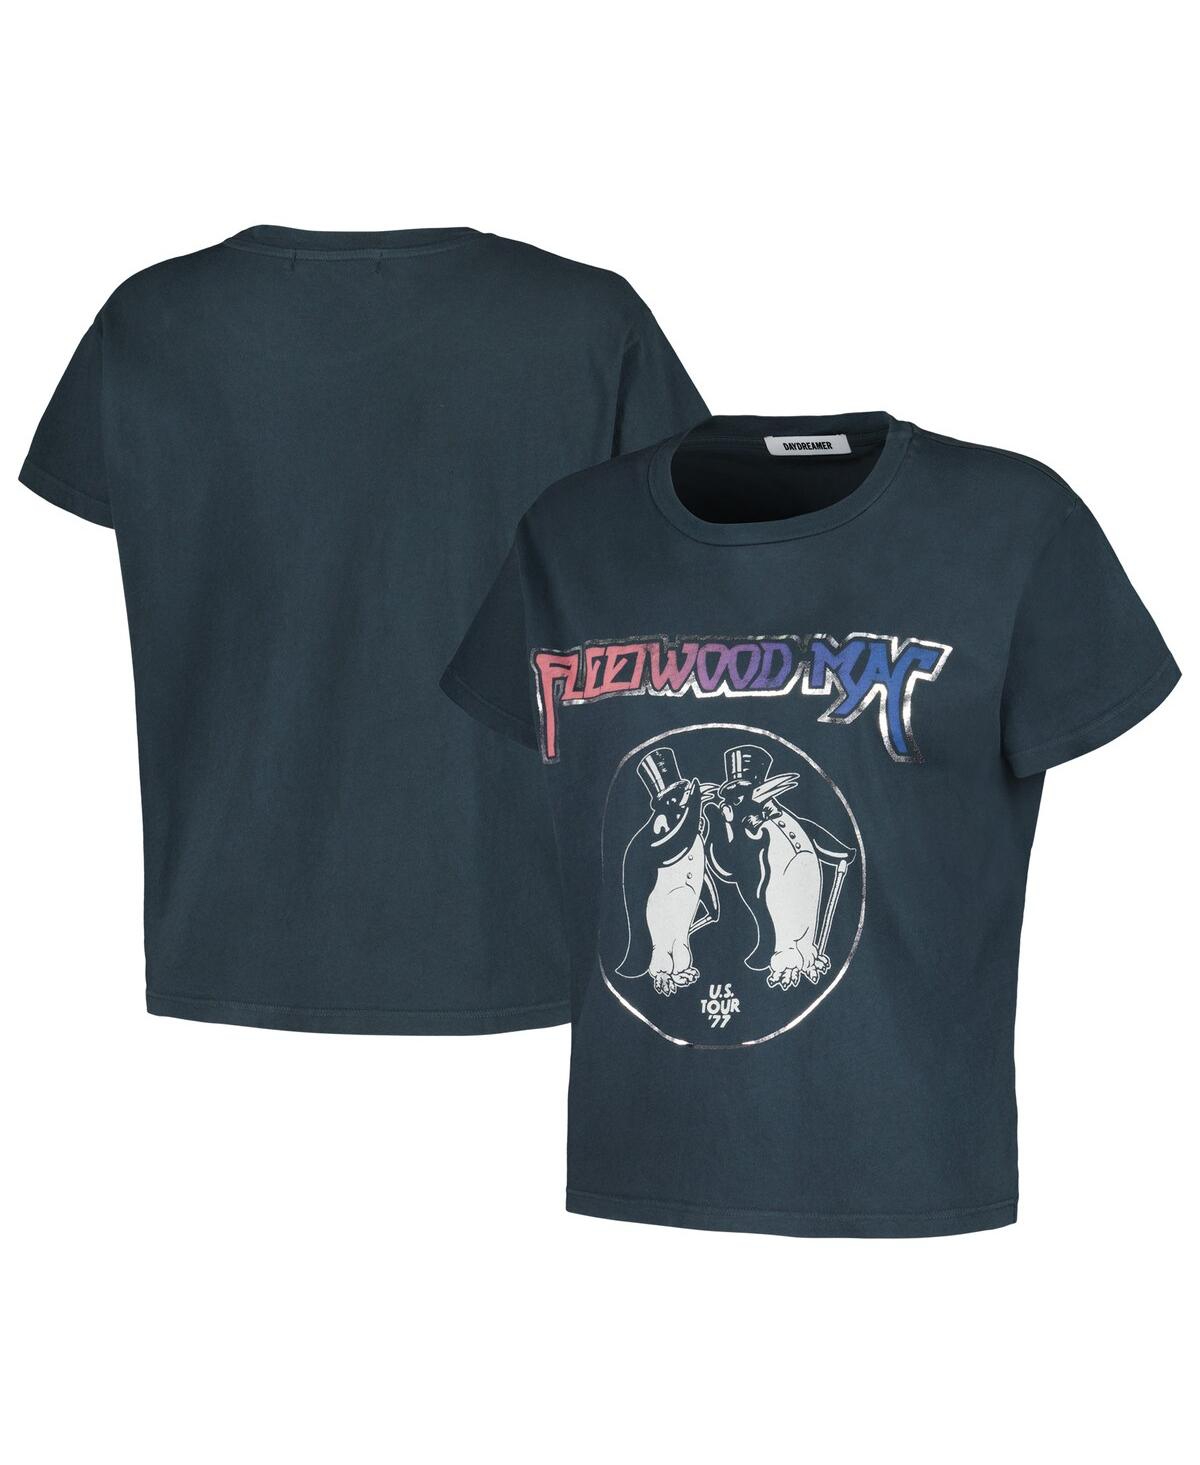 Women's Daydreamer Black Fleetwood Mac U.s. Tour 1977 Graphic T-shirt - Black